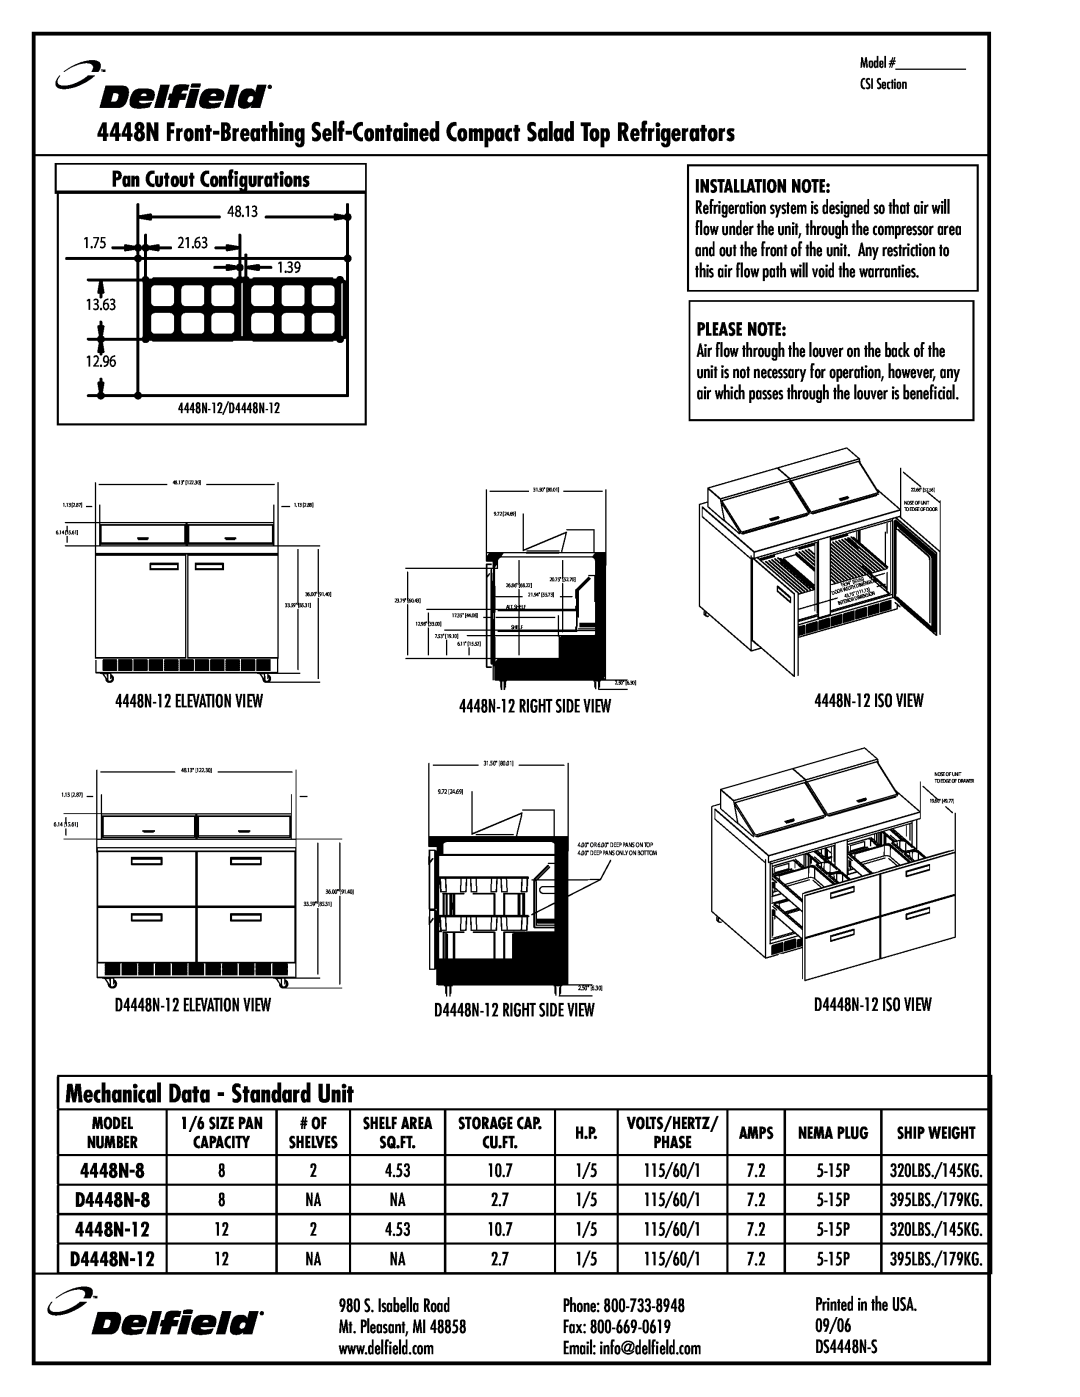 Delfield Mechanical Data - Standard Unit, 4448N-8, D4448N-12, Pan Cutout Configurations, Installation Note, Please Note 